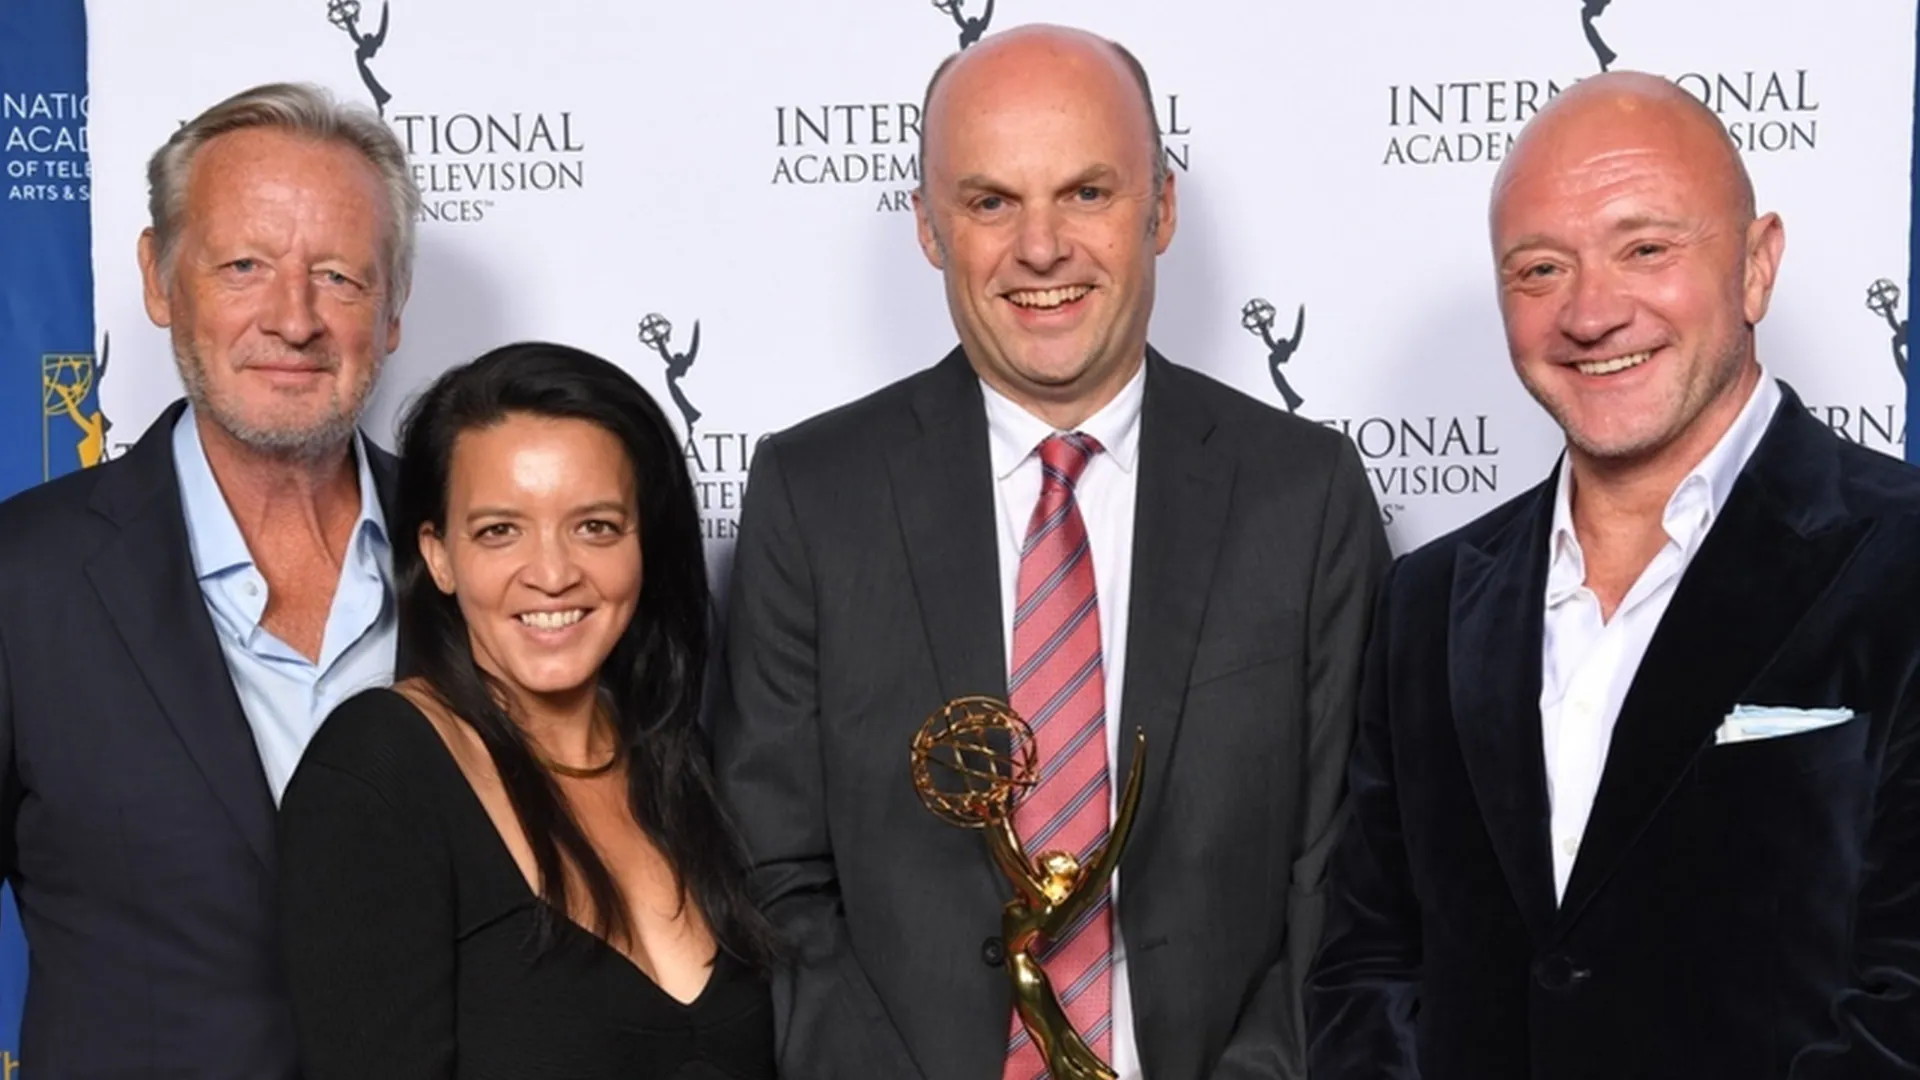 Sky News wins International Emmy for coverage of the Ukraine War